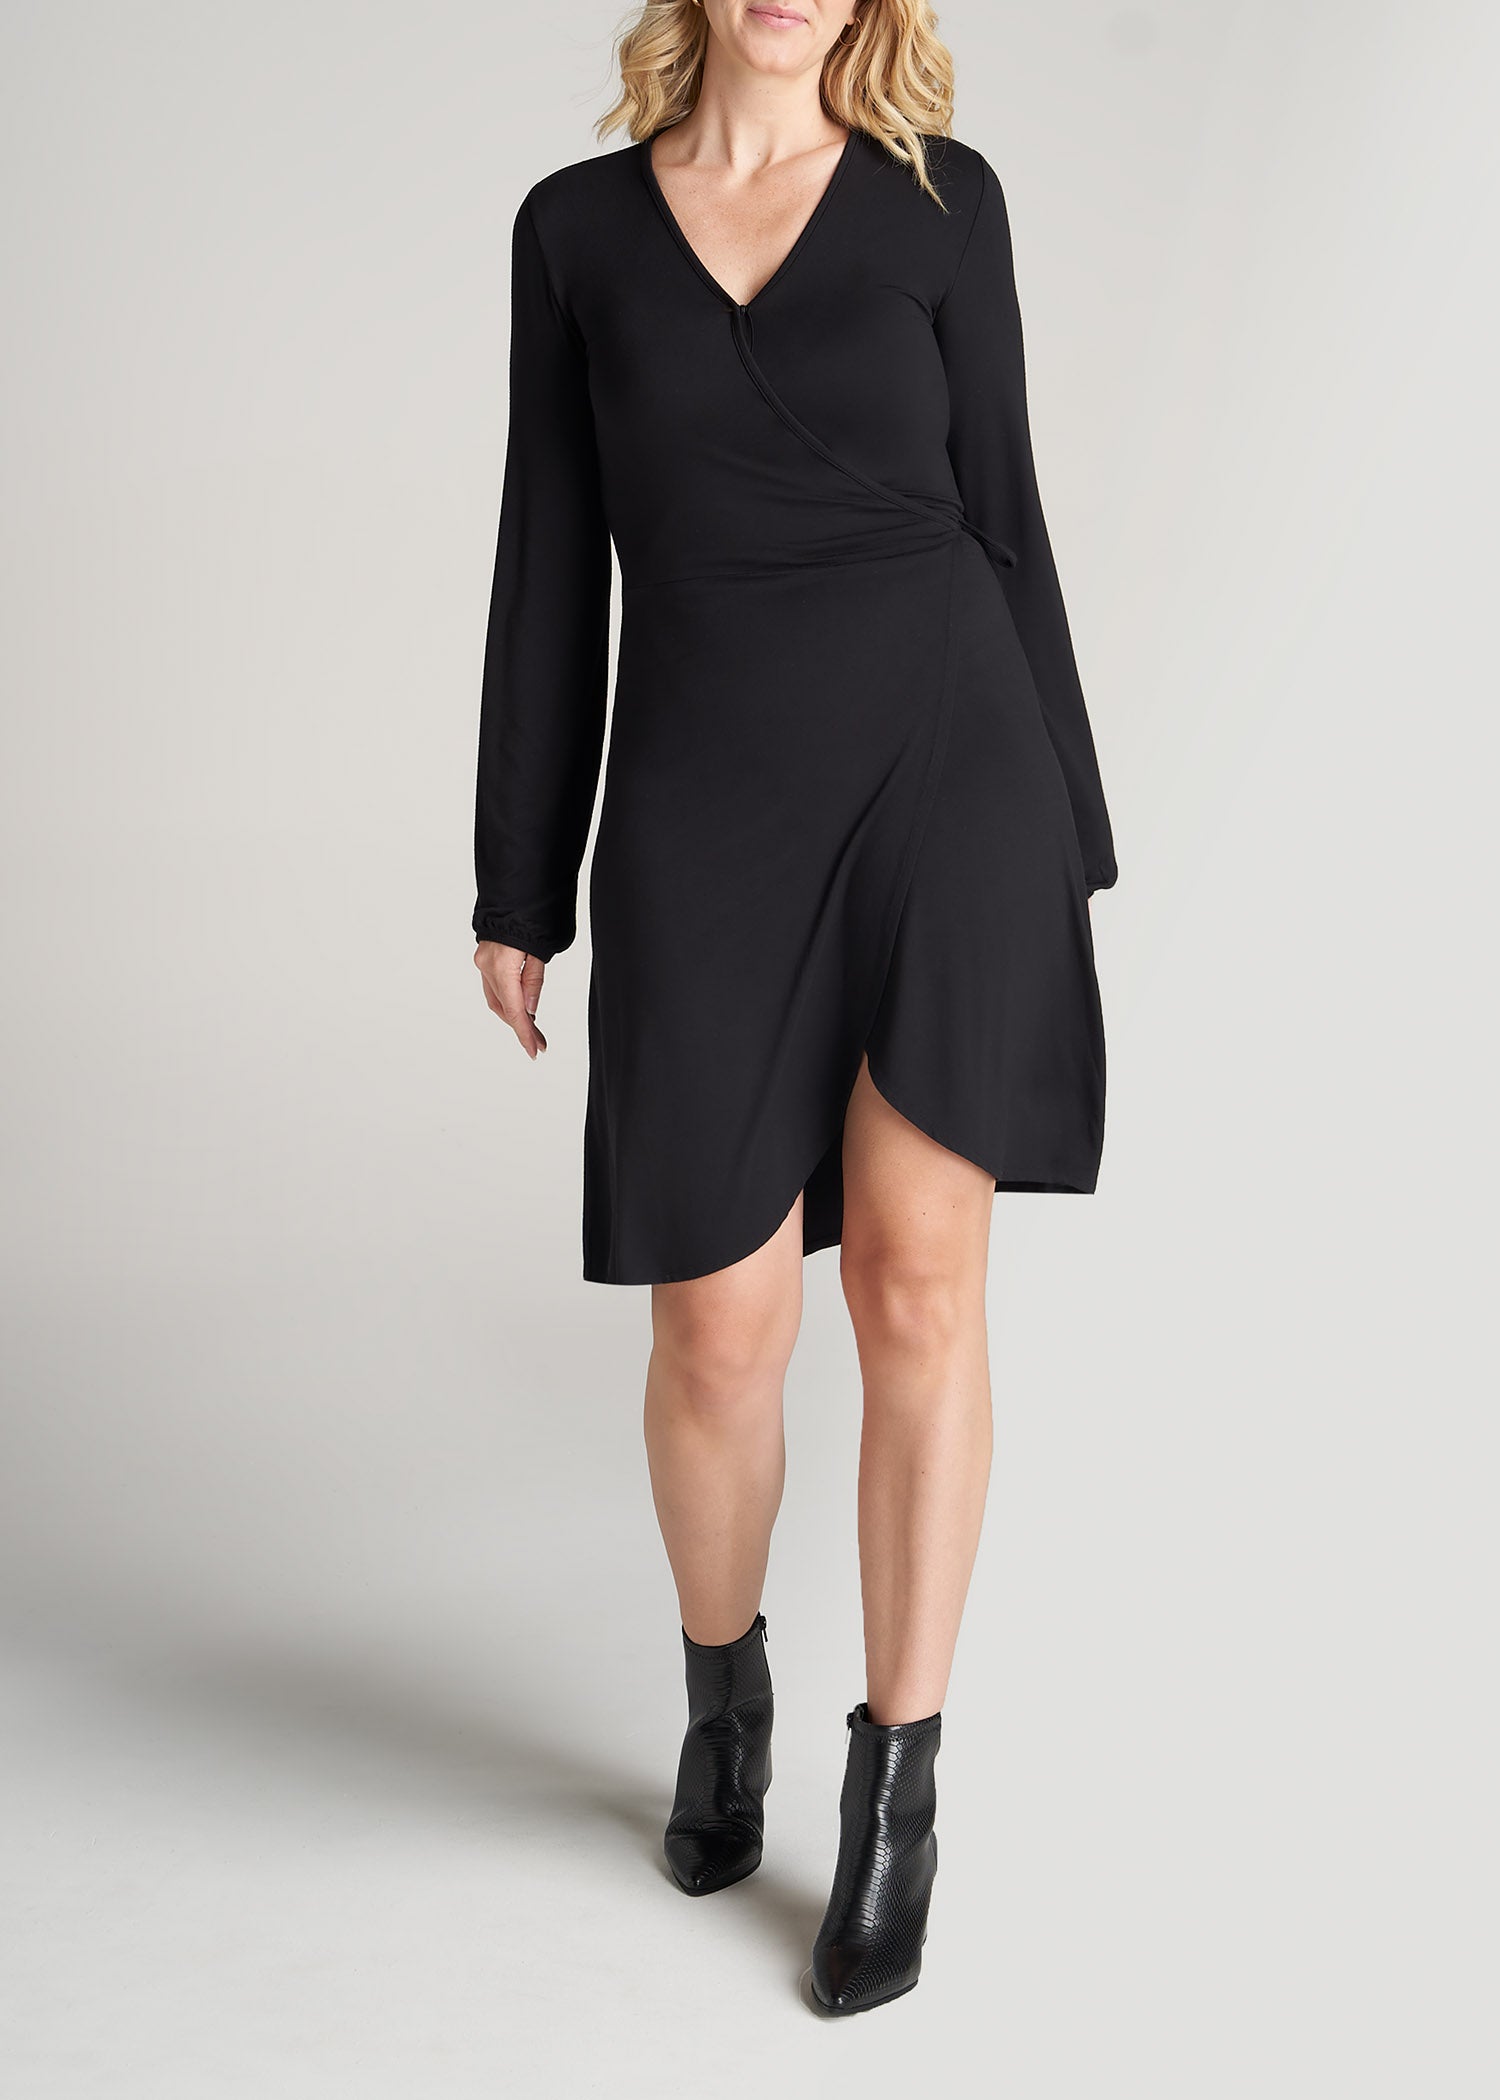 long tall woman in a black dress